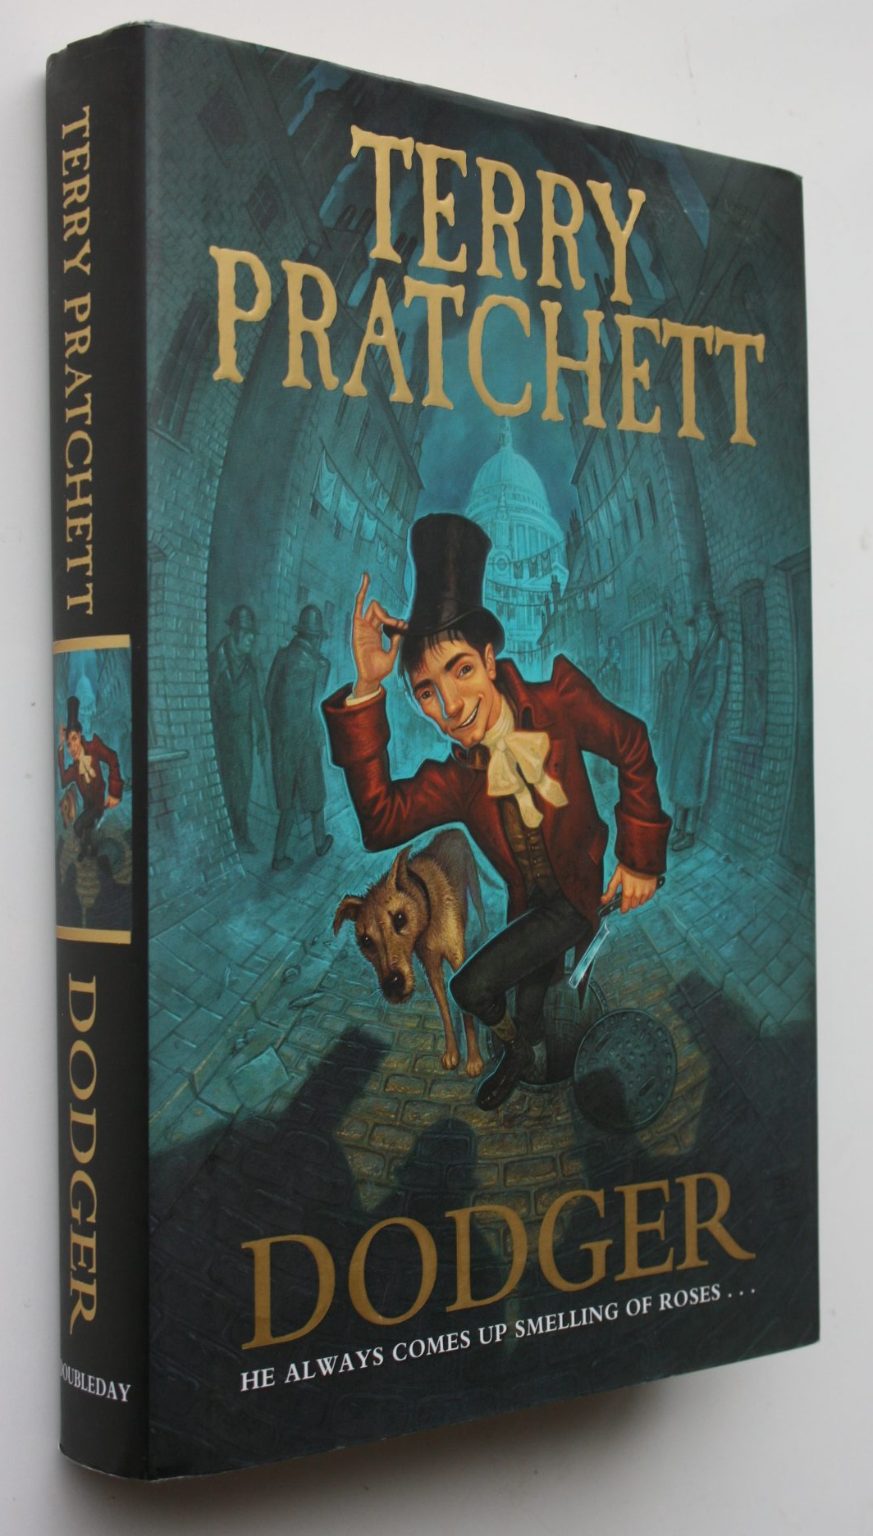 Dodger (Hardback) 1st edition. By Terry Pratchett